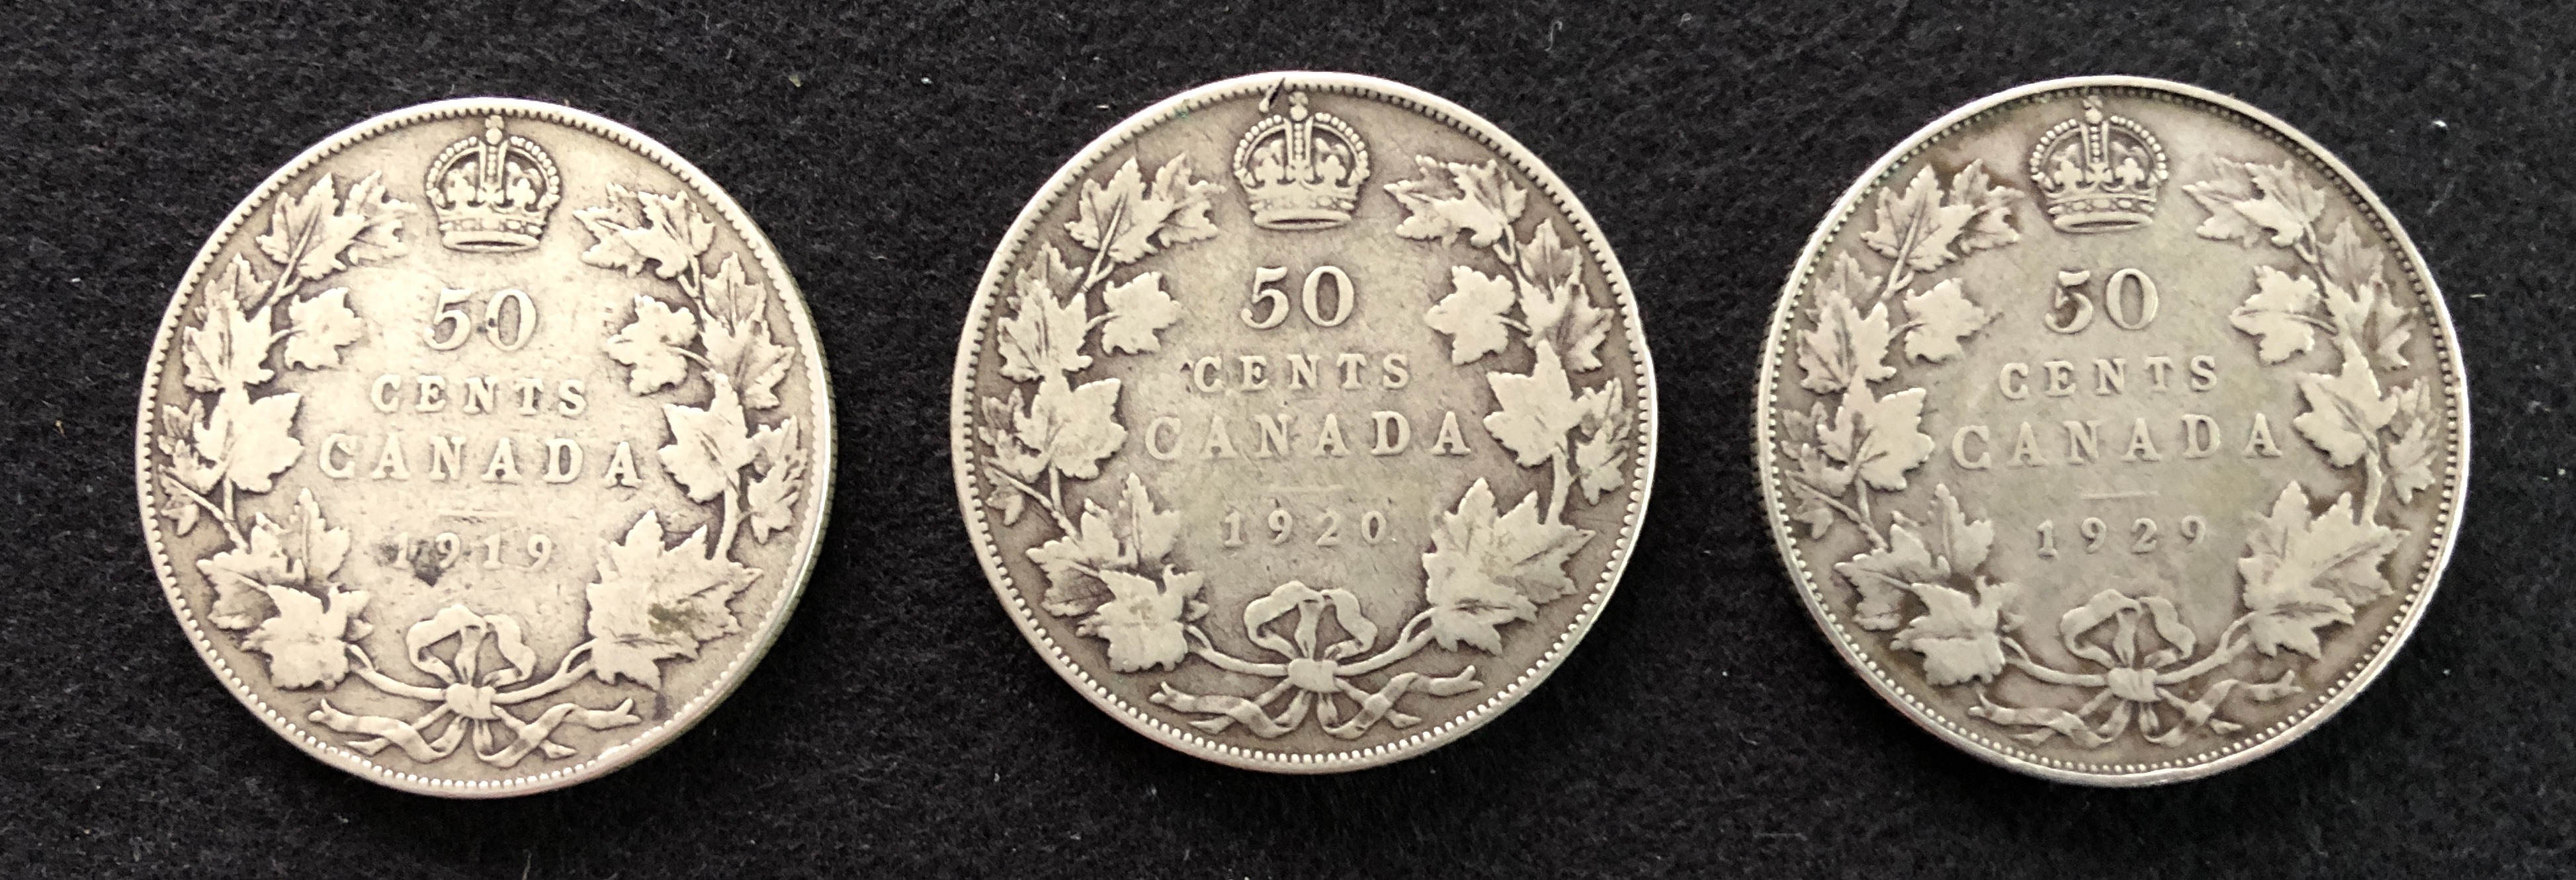 50 cents - 1919-1929.JPG